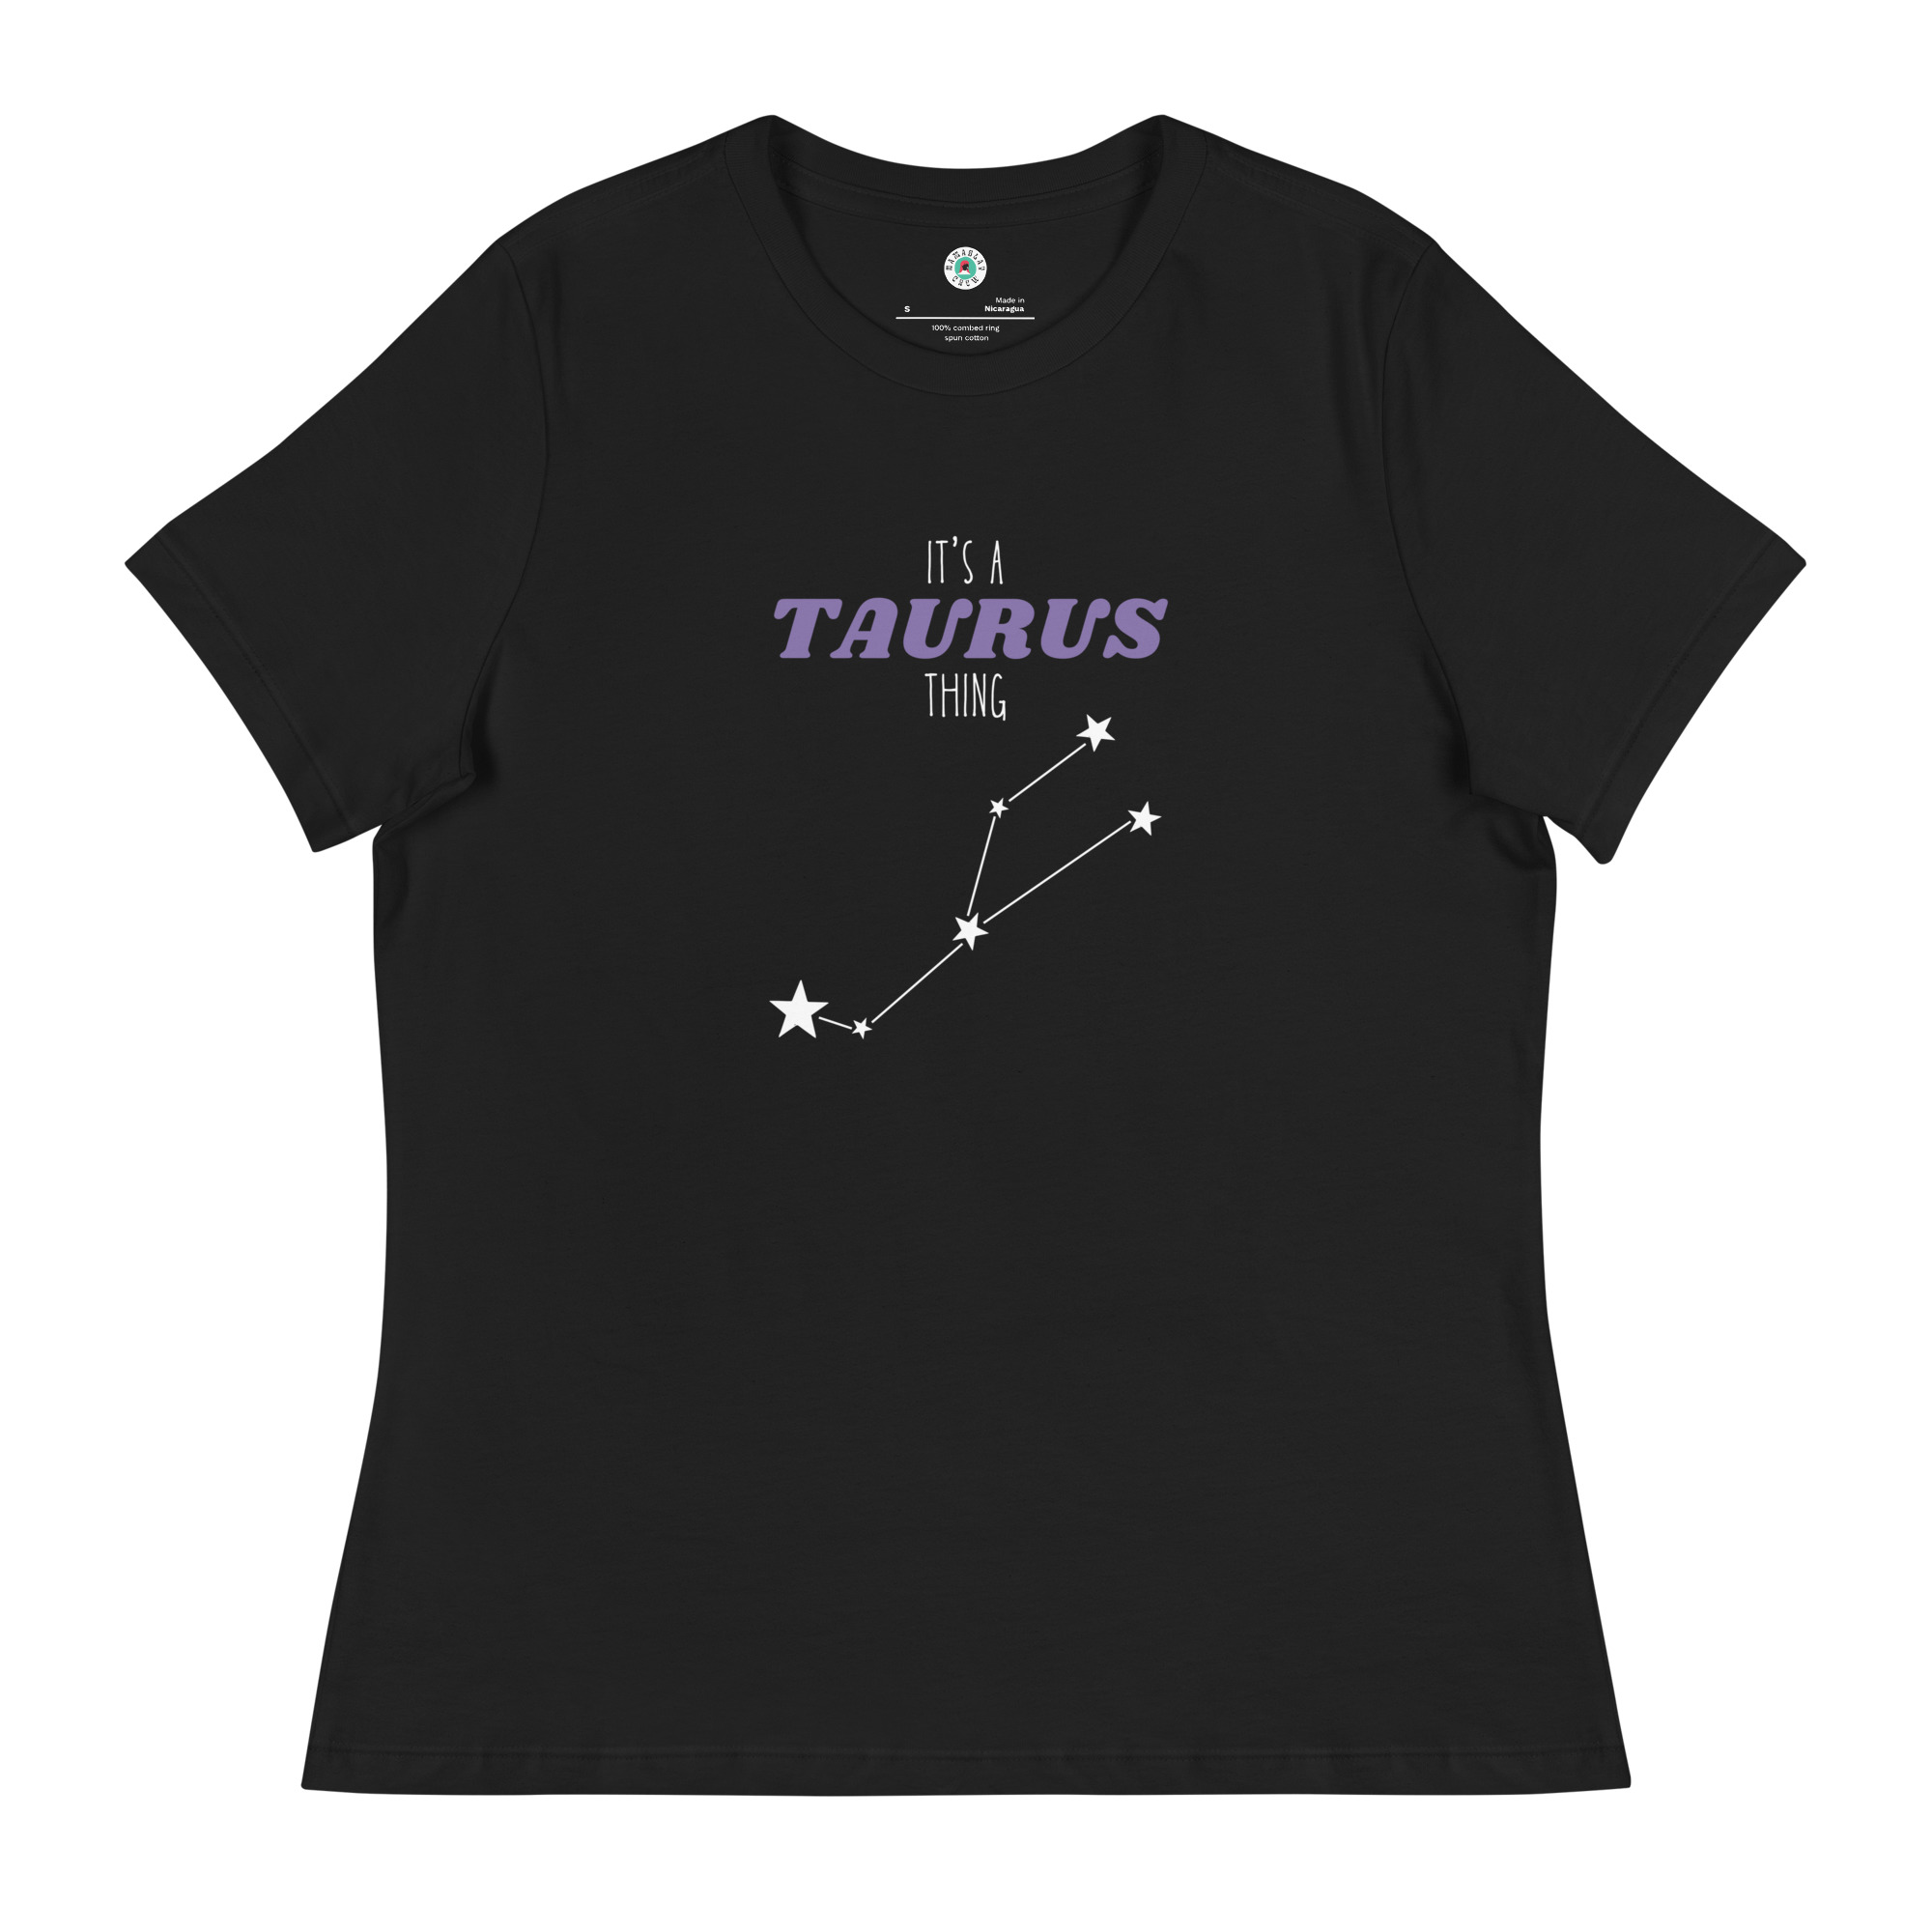 "It's a Taurus Thing" Statement Shirt